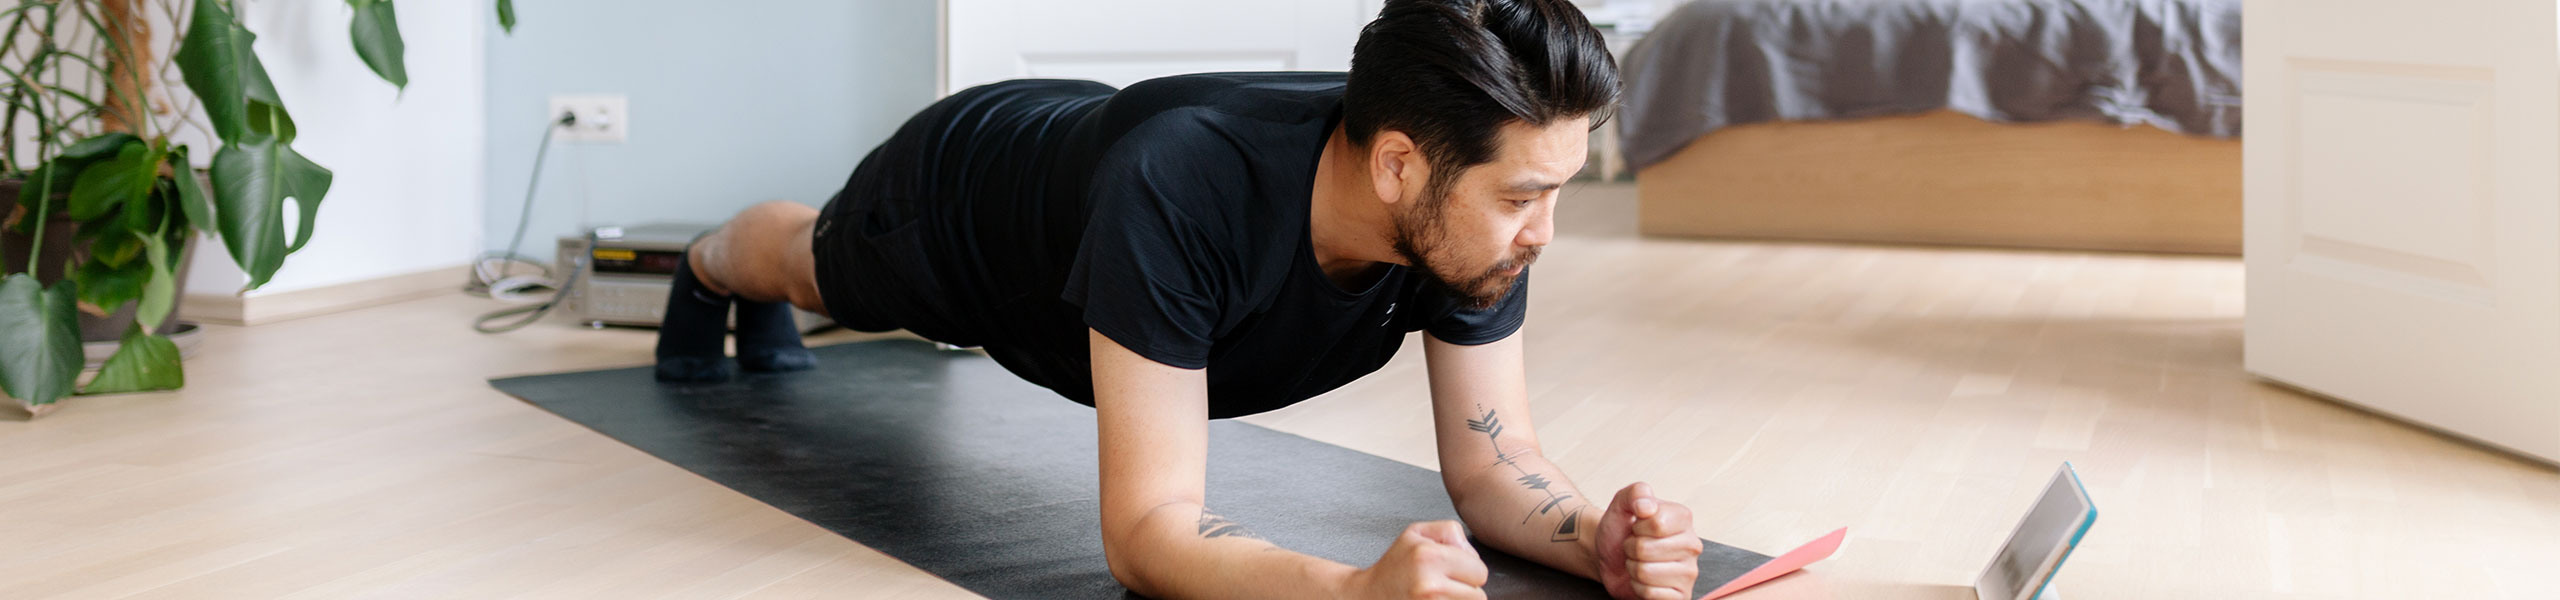 Man holds plank position on yoga mat